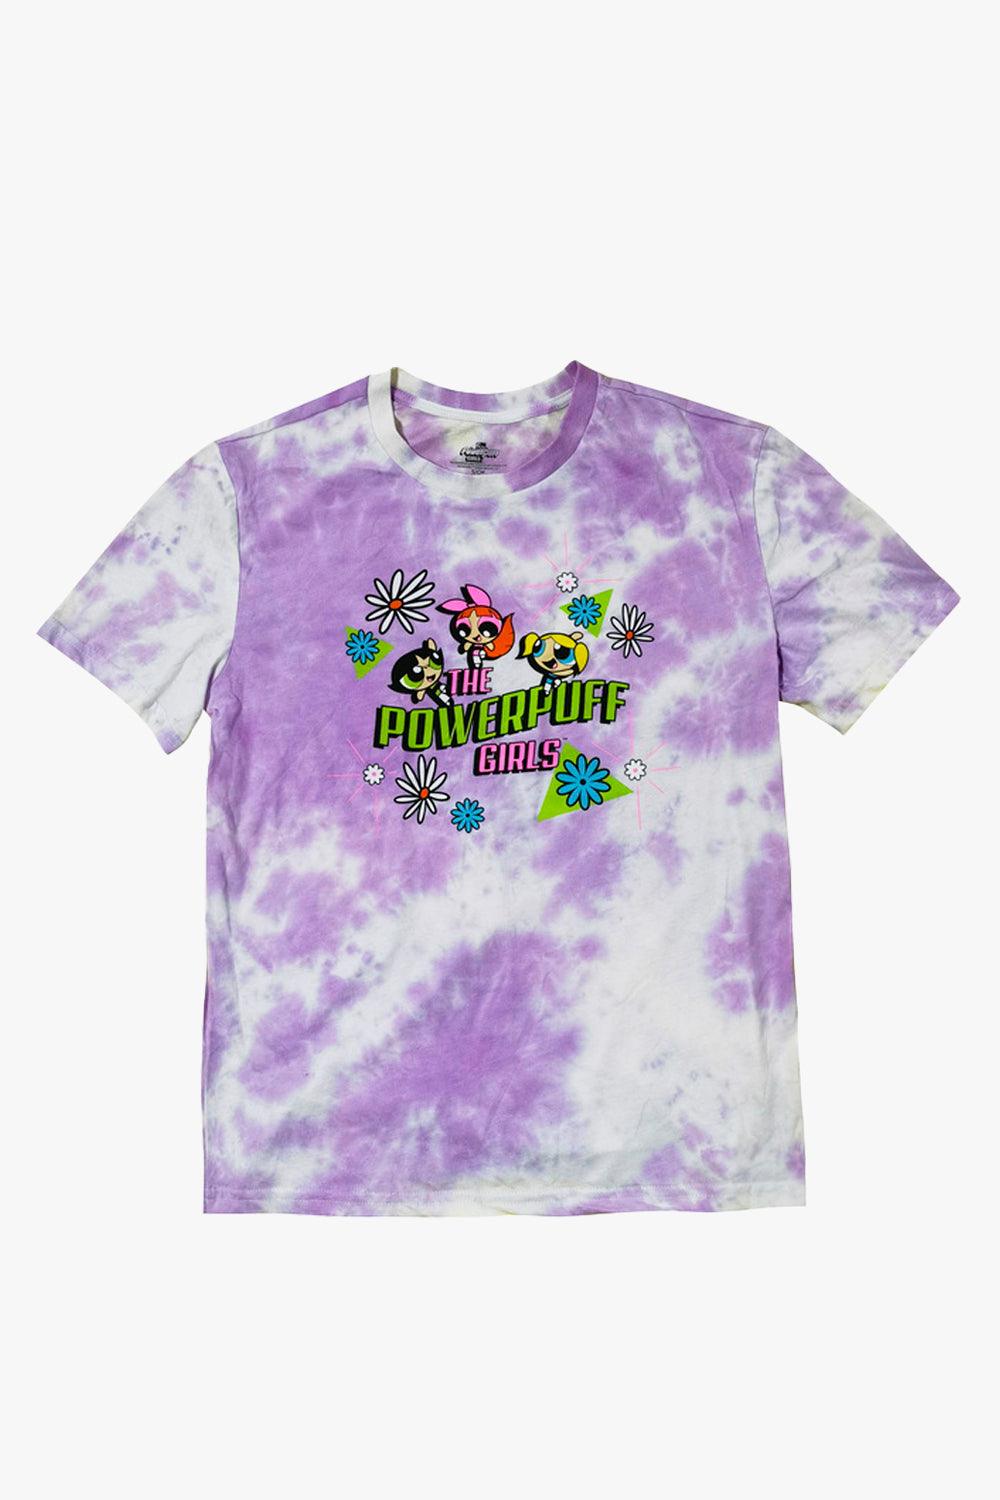 Powerpuff Girls Tie Dye Purple T-Shirt - Aesthetic Clothes Shop